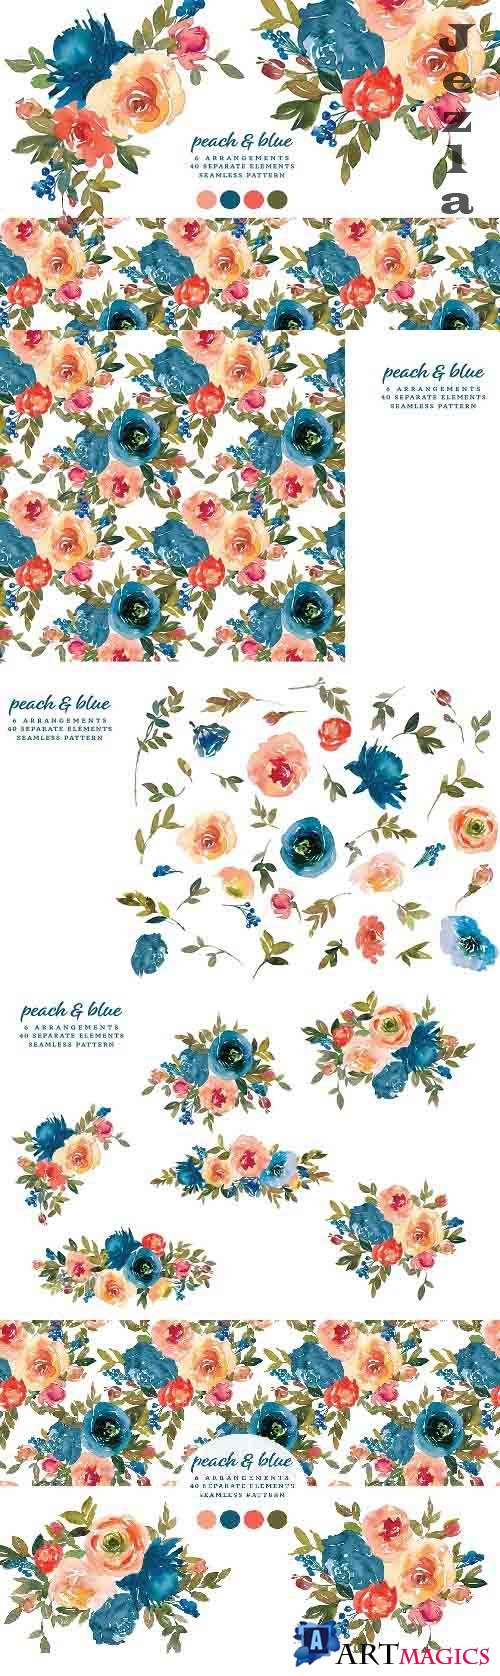 Watercolor Peach & Blue Clipart - 6157004